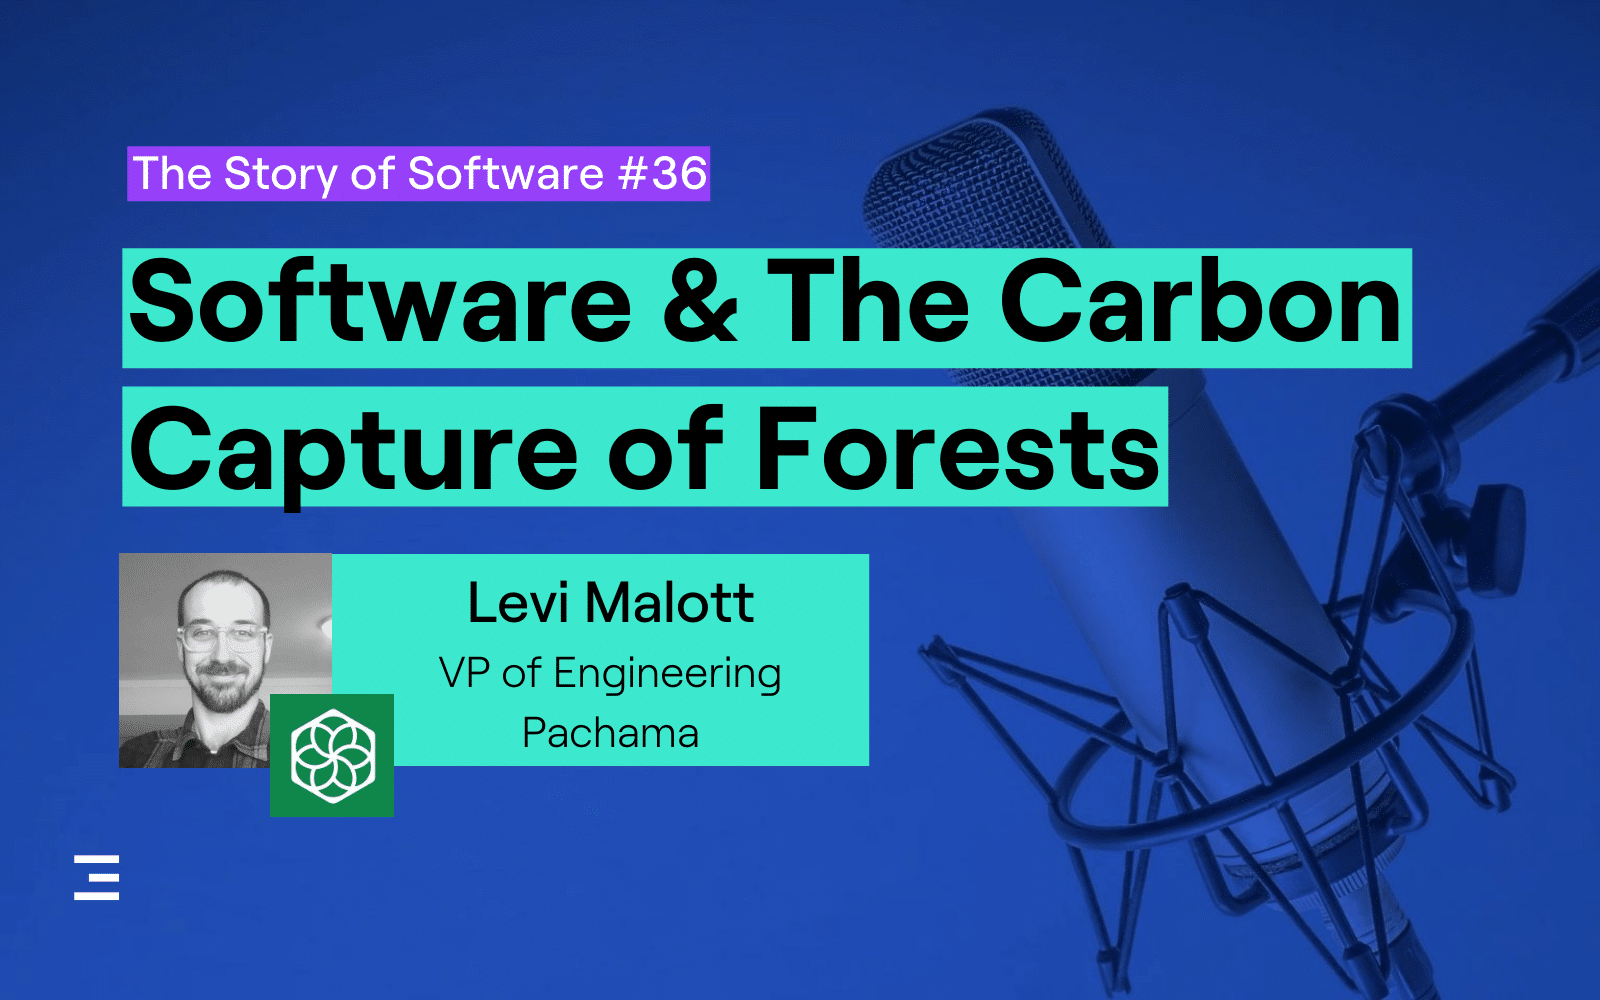 software podcast episode on reforestation and carbon capture of forests